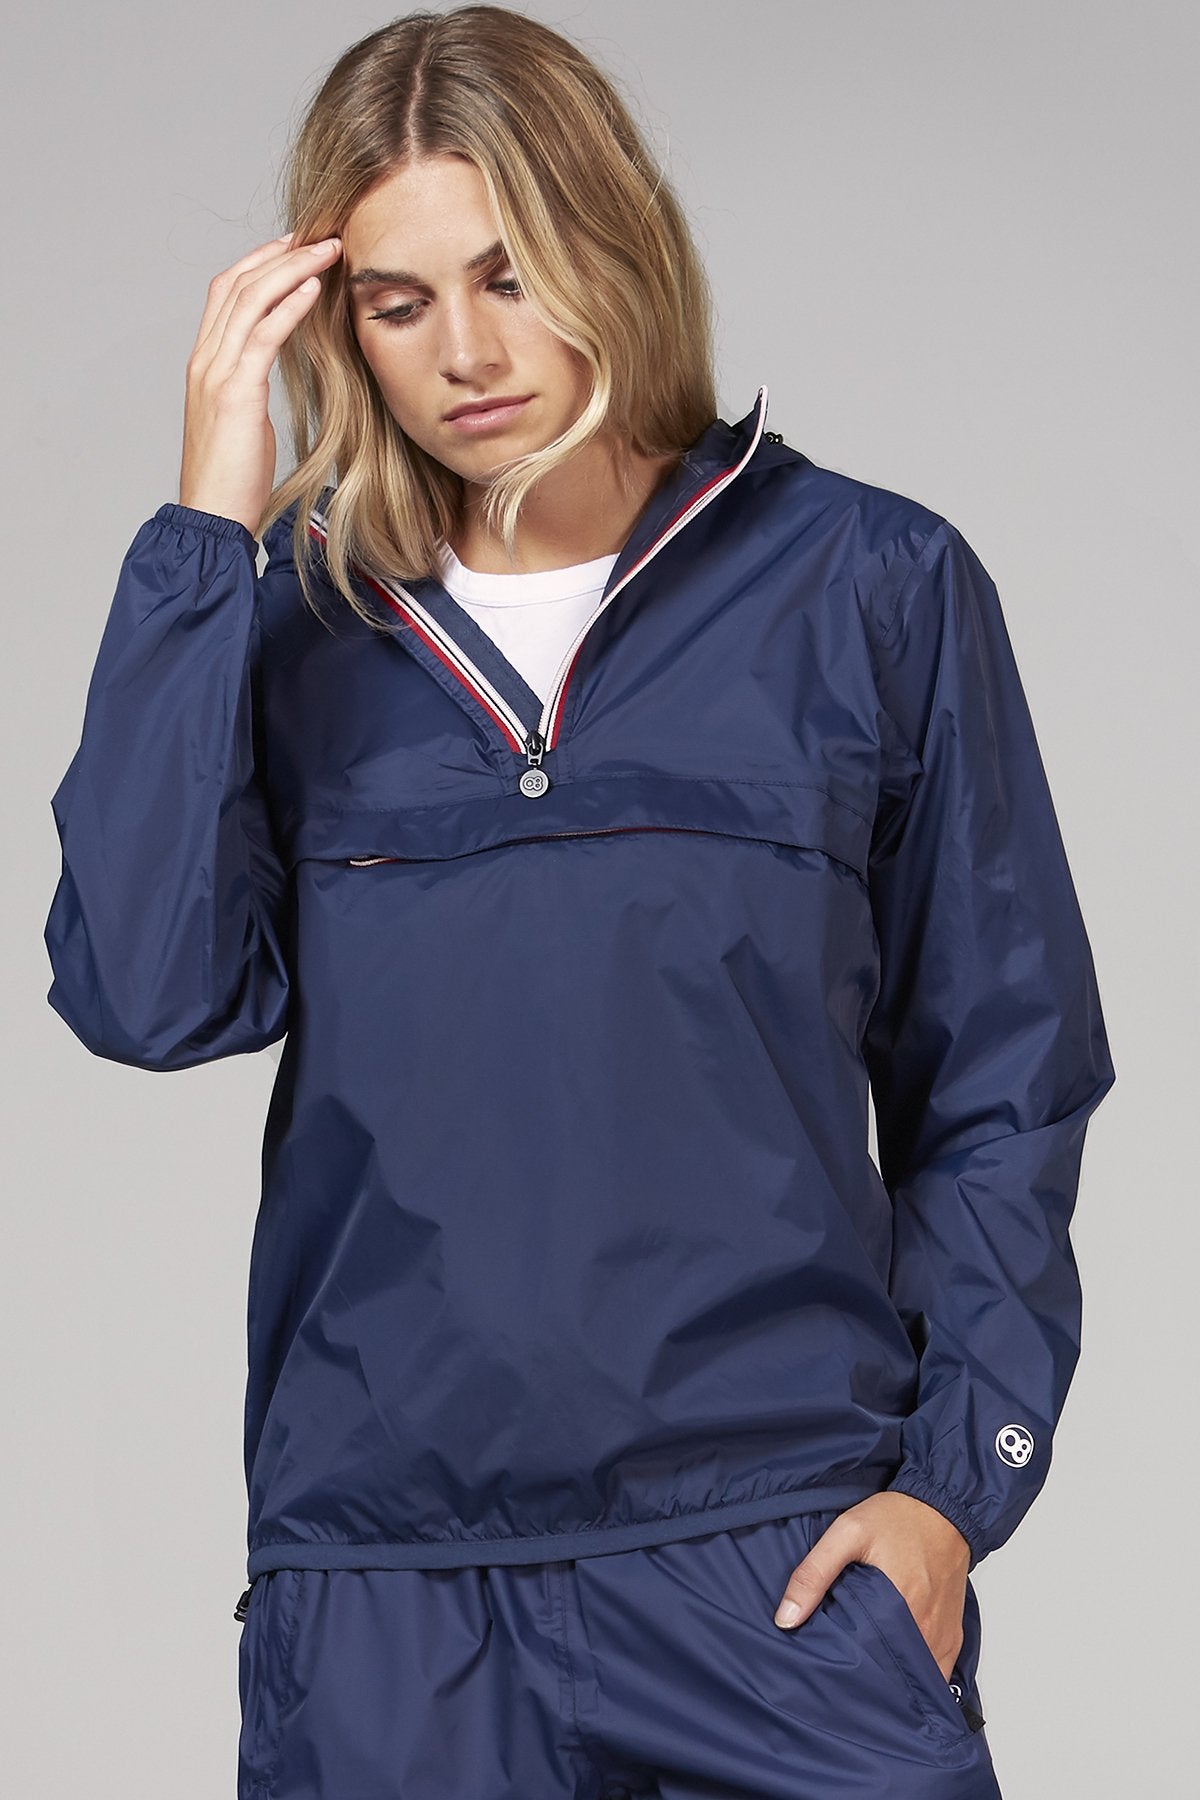 Alex - Navy Quarter Zip Packable Rain Jacket